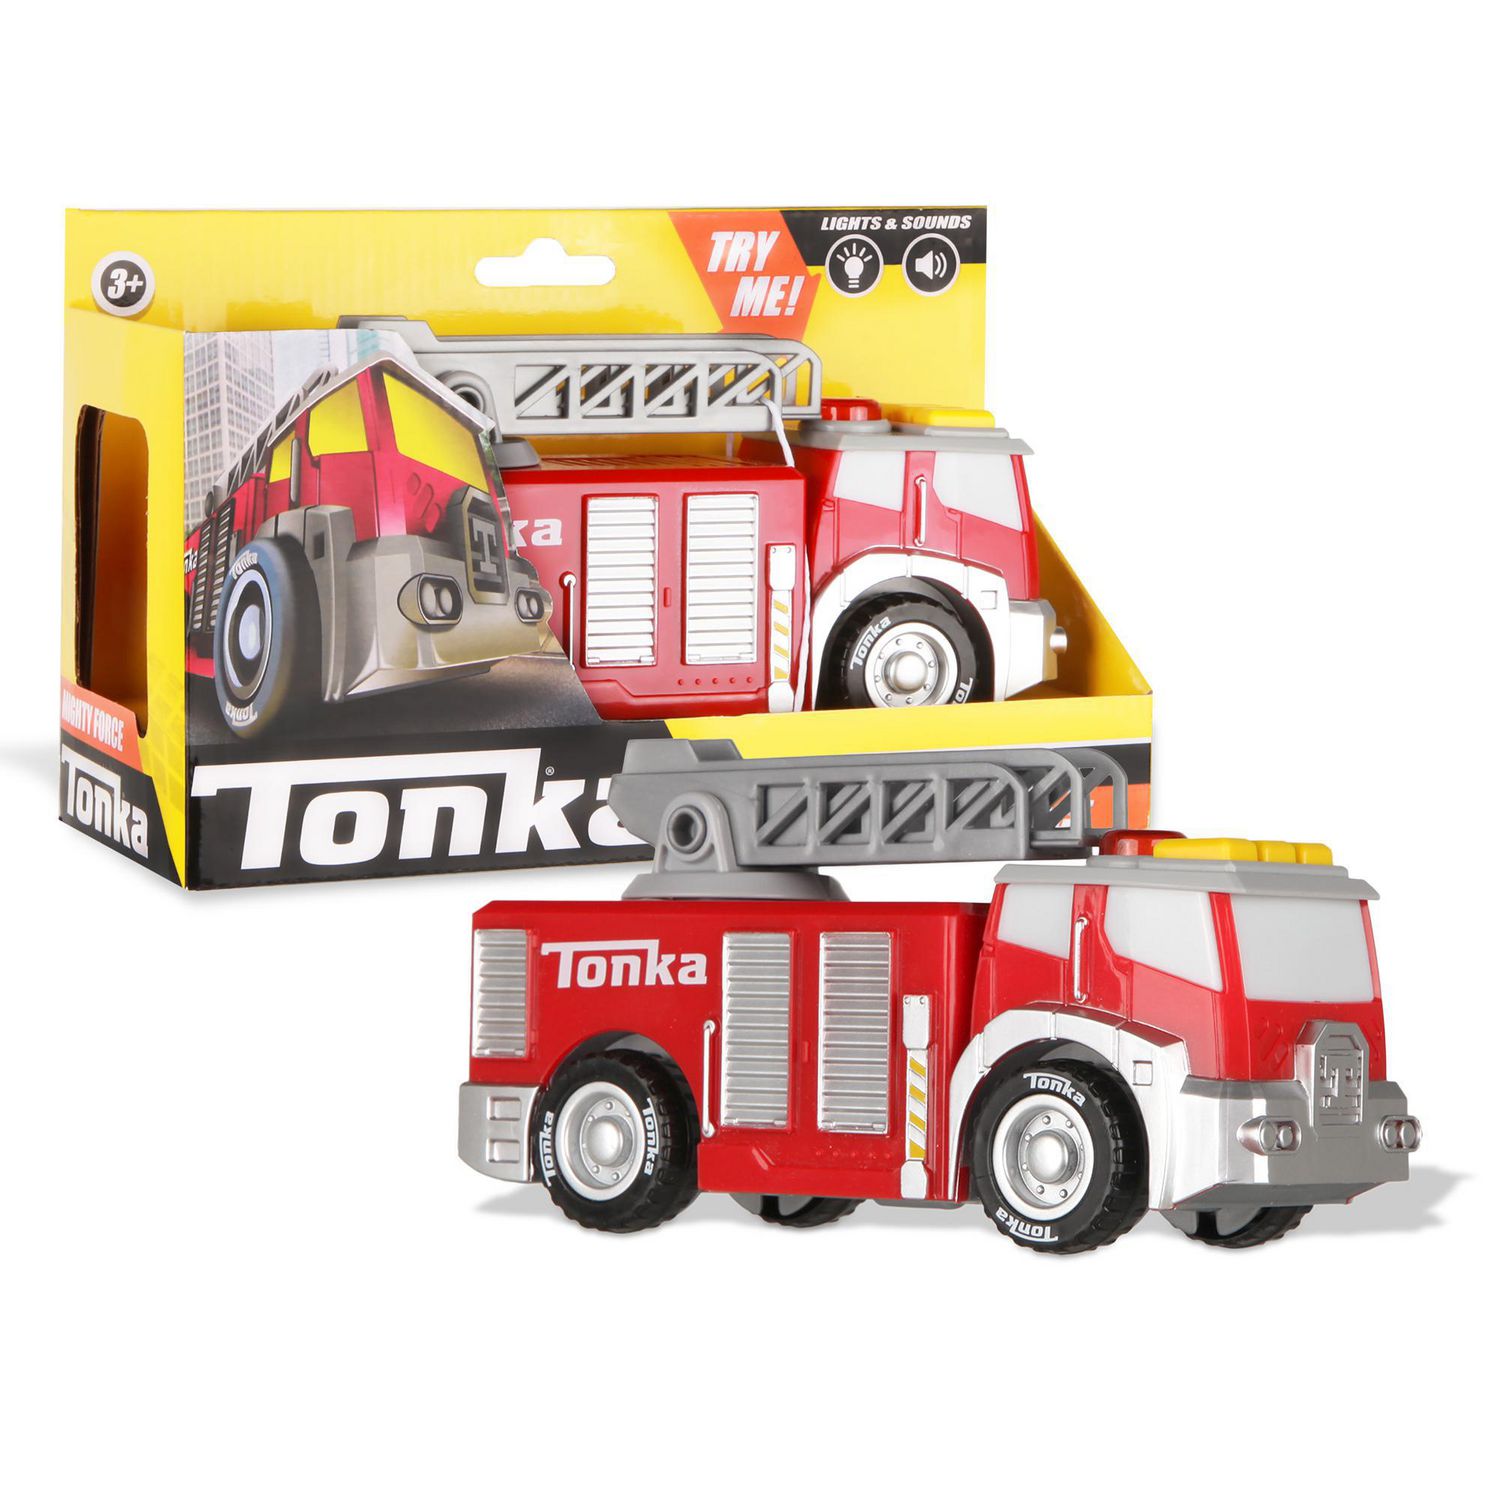 Tonka - Mighty Force Lights & Sounds Fire Truck - Walmart.ca